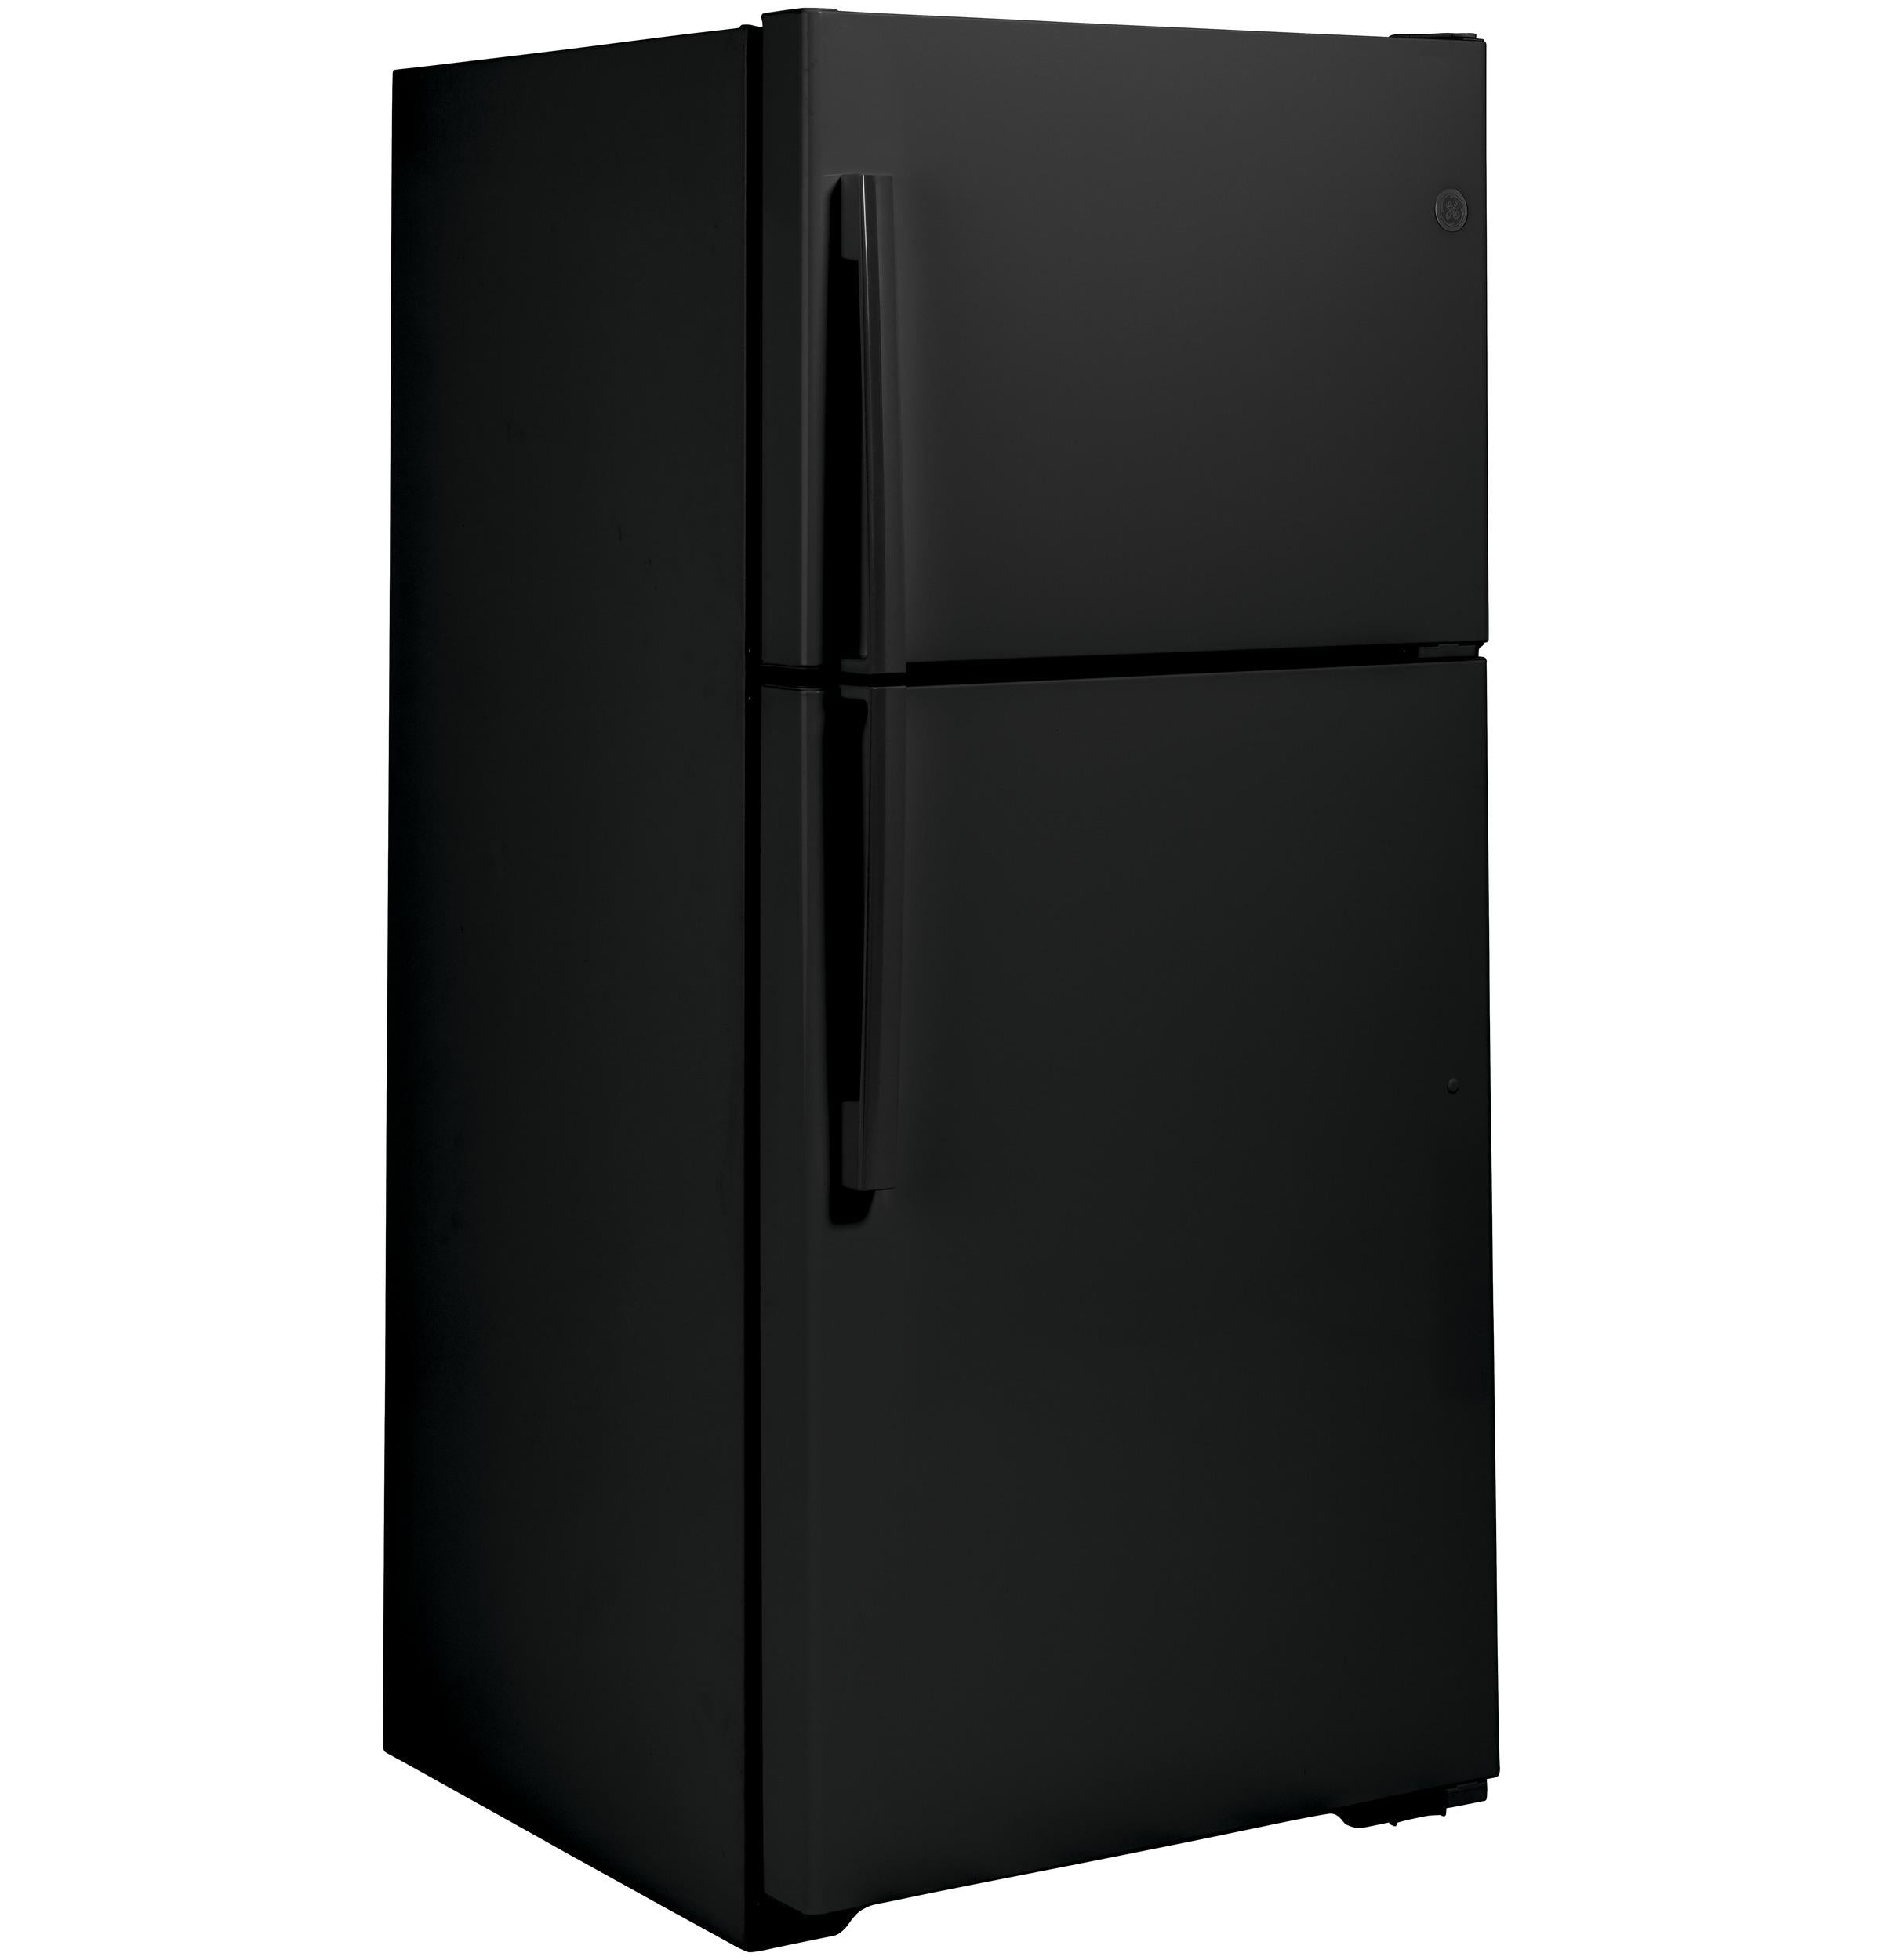 GE 21.9 Cu. Ft. Garage-Ready Top-Freezer Refrigerator Stainless Steel  GTS22KYNRFS - Best Buy